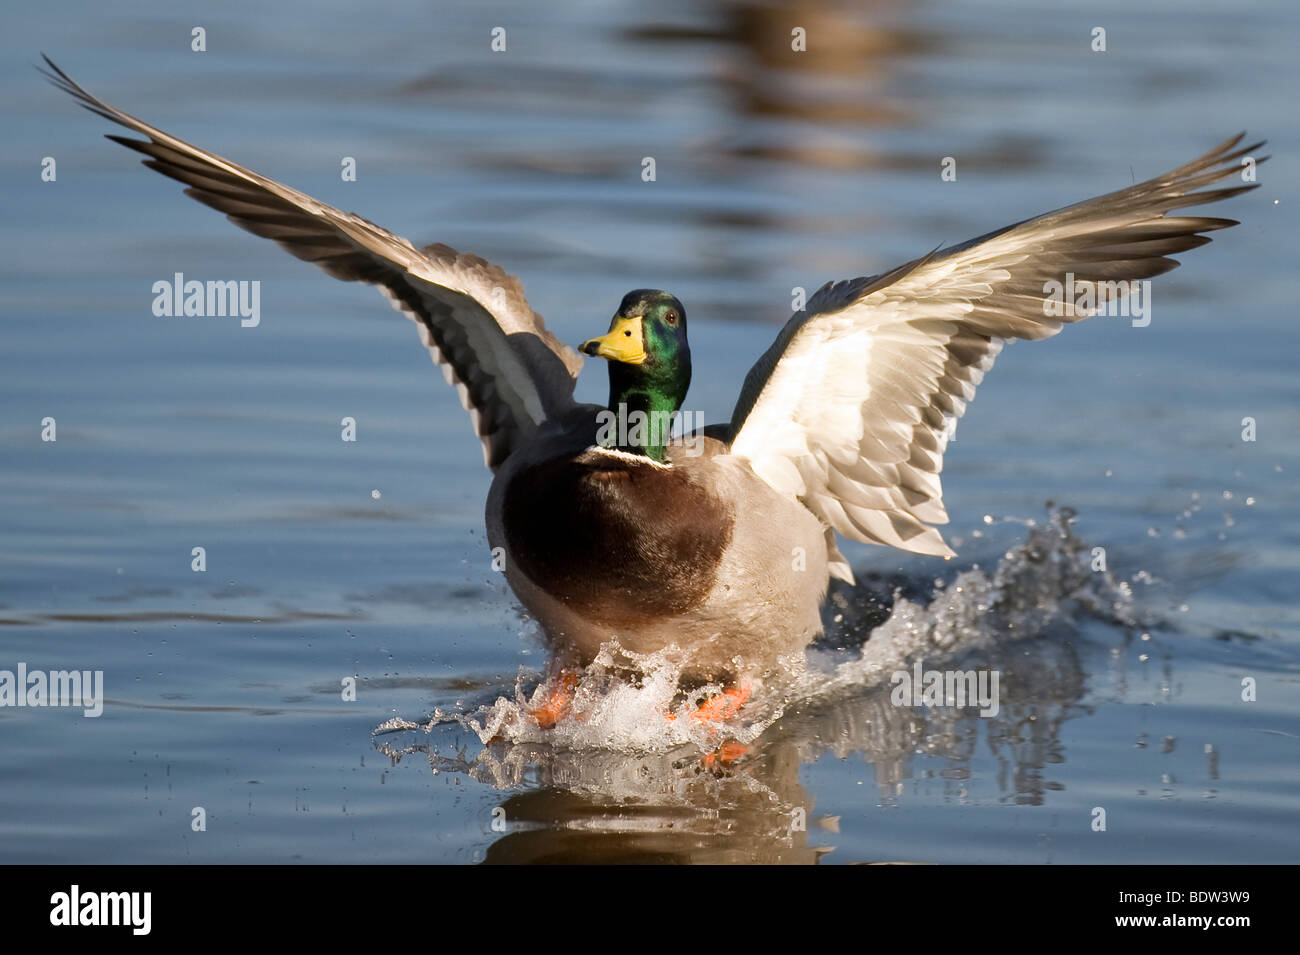 A dabbling duck in landing approach Stock Photo